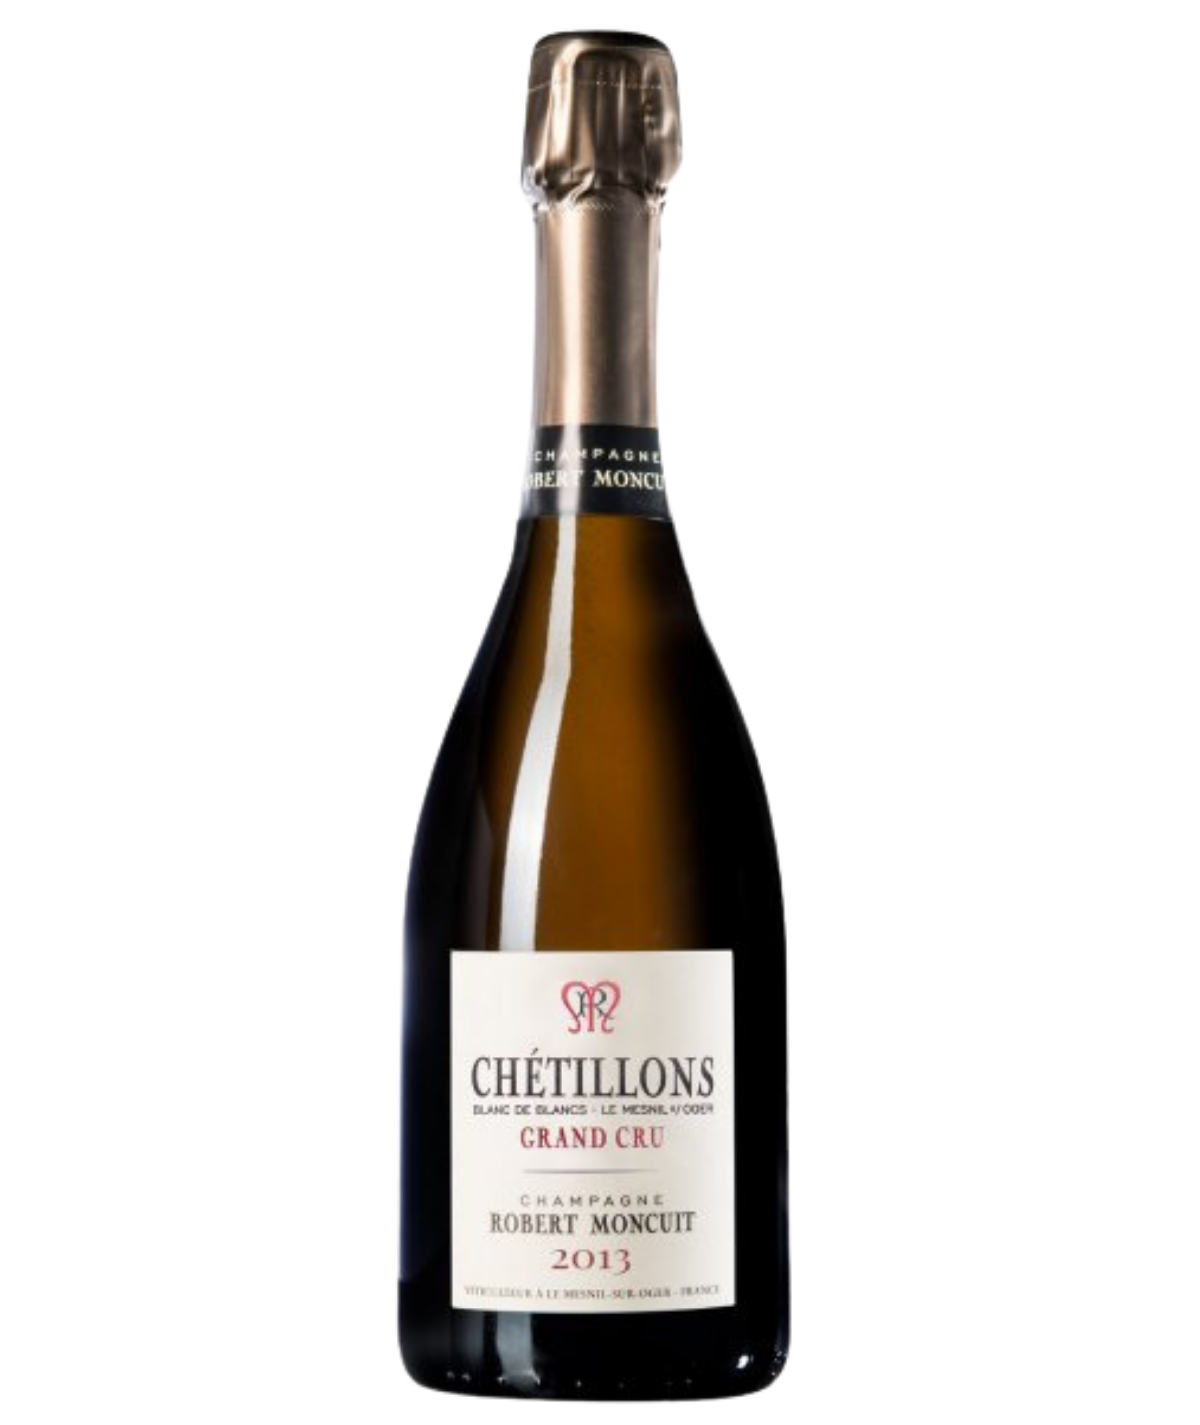 ROBERT MONCUIT champagne Grand Cru Chétillons Blanc de Blancs Extra-Brut 2013 vintage